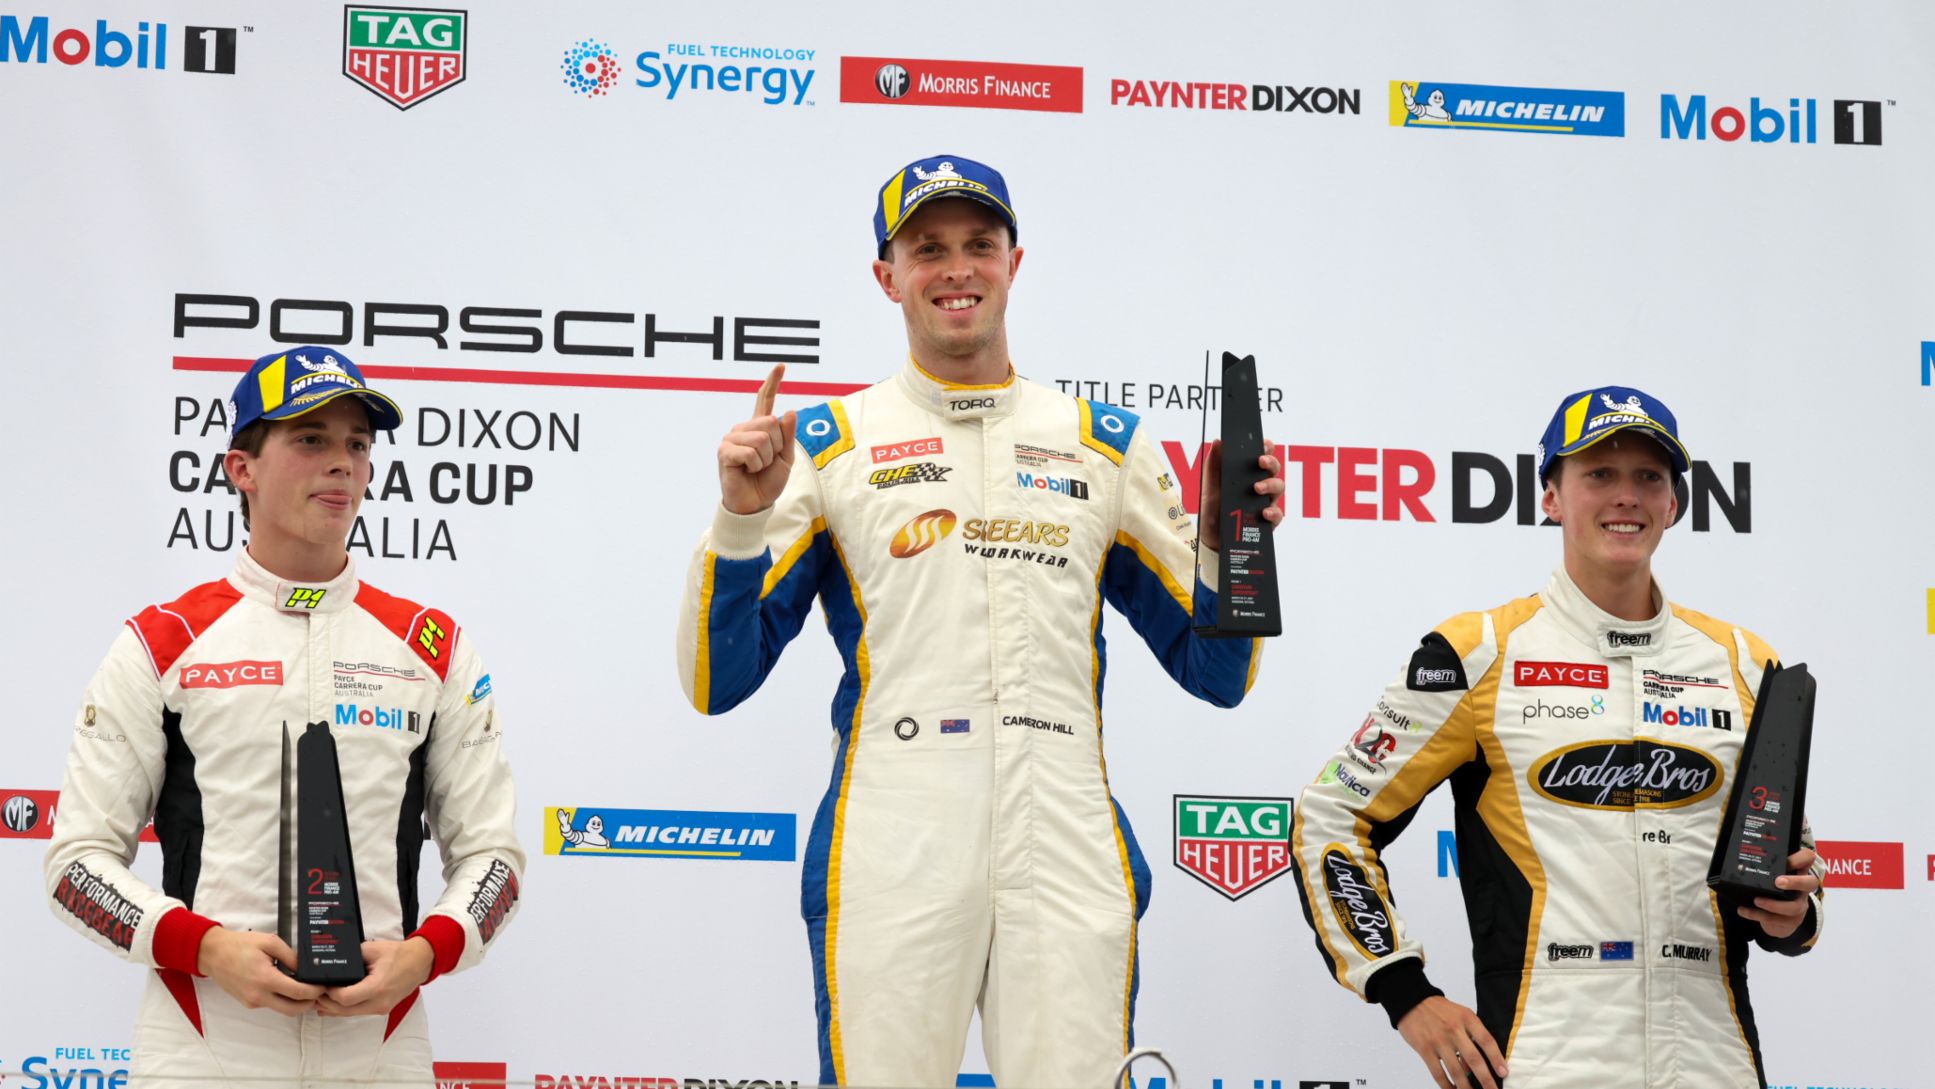 Cameron Hill strikes first in Porsche Paynter Dixon Carrera Cup Australia  season opener - Porsche Newsroom AUS